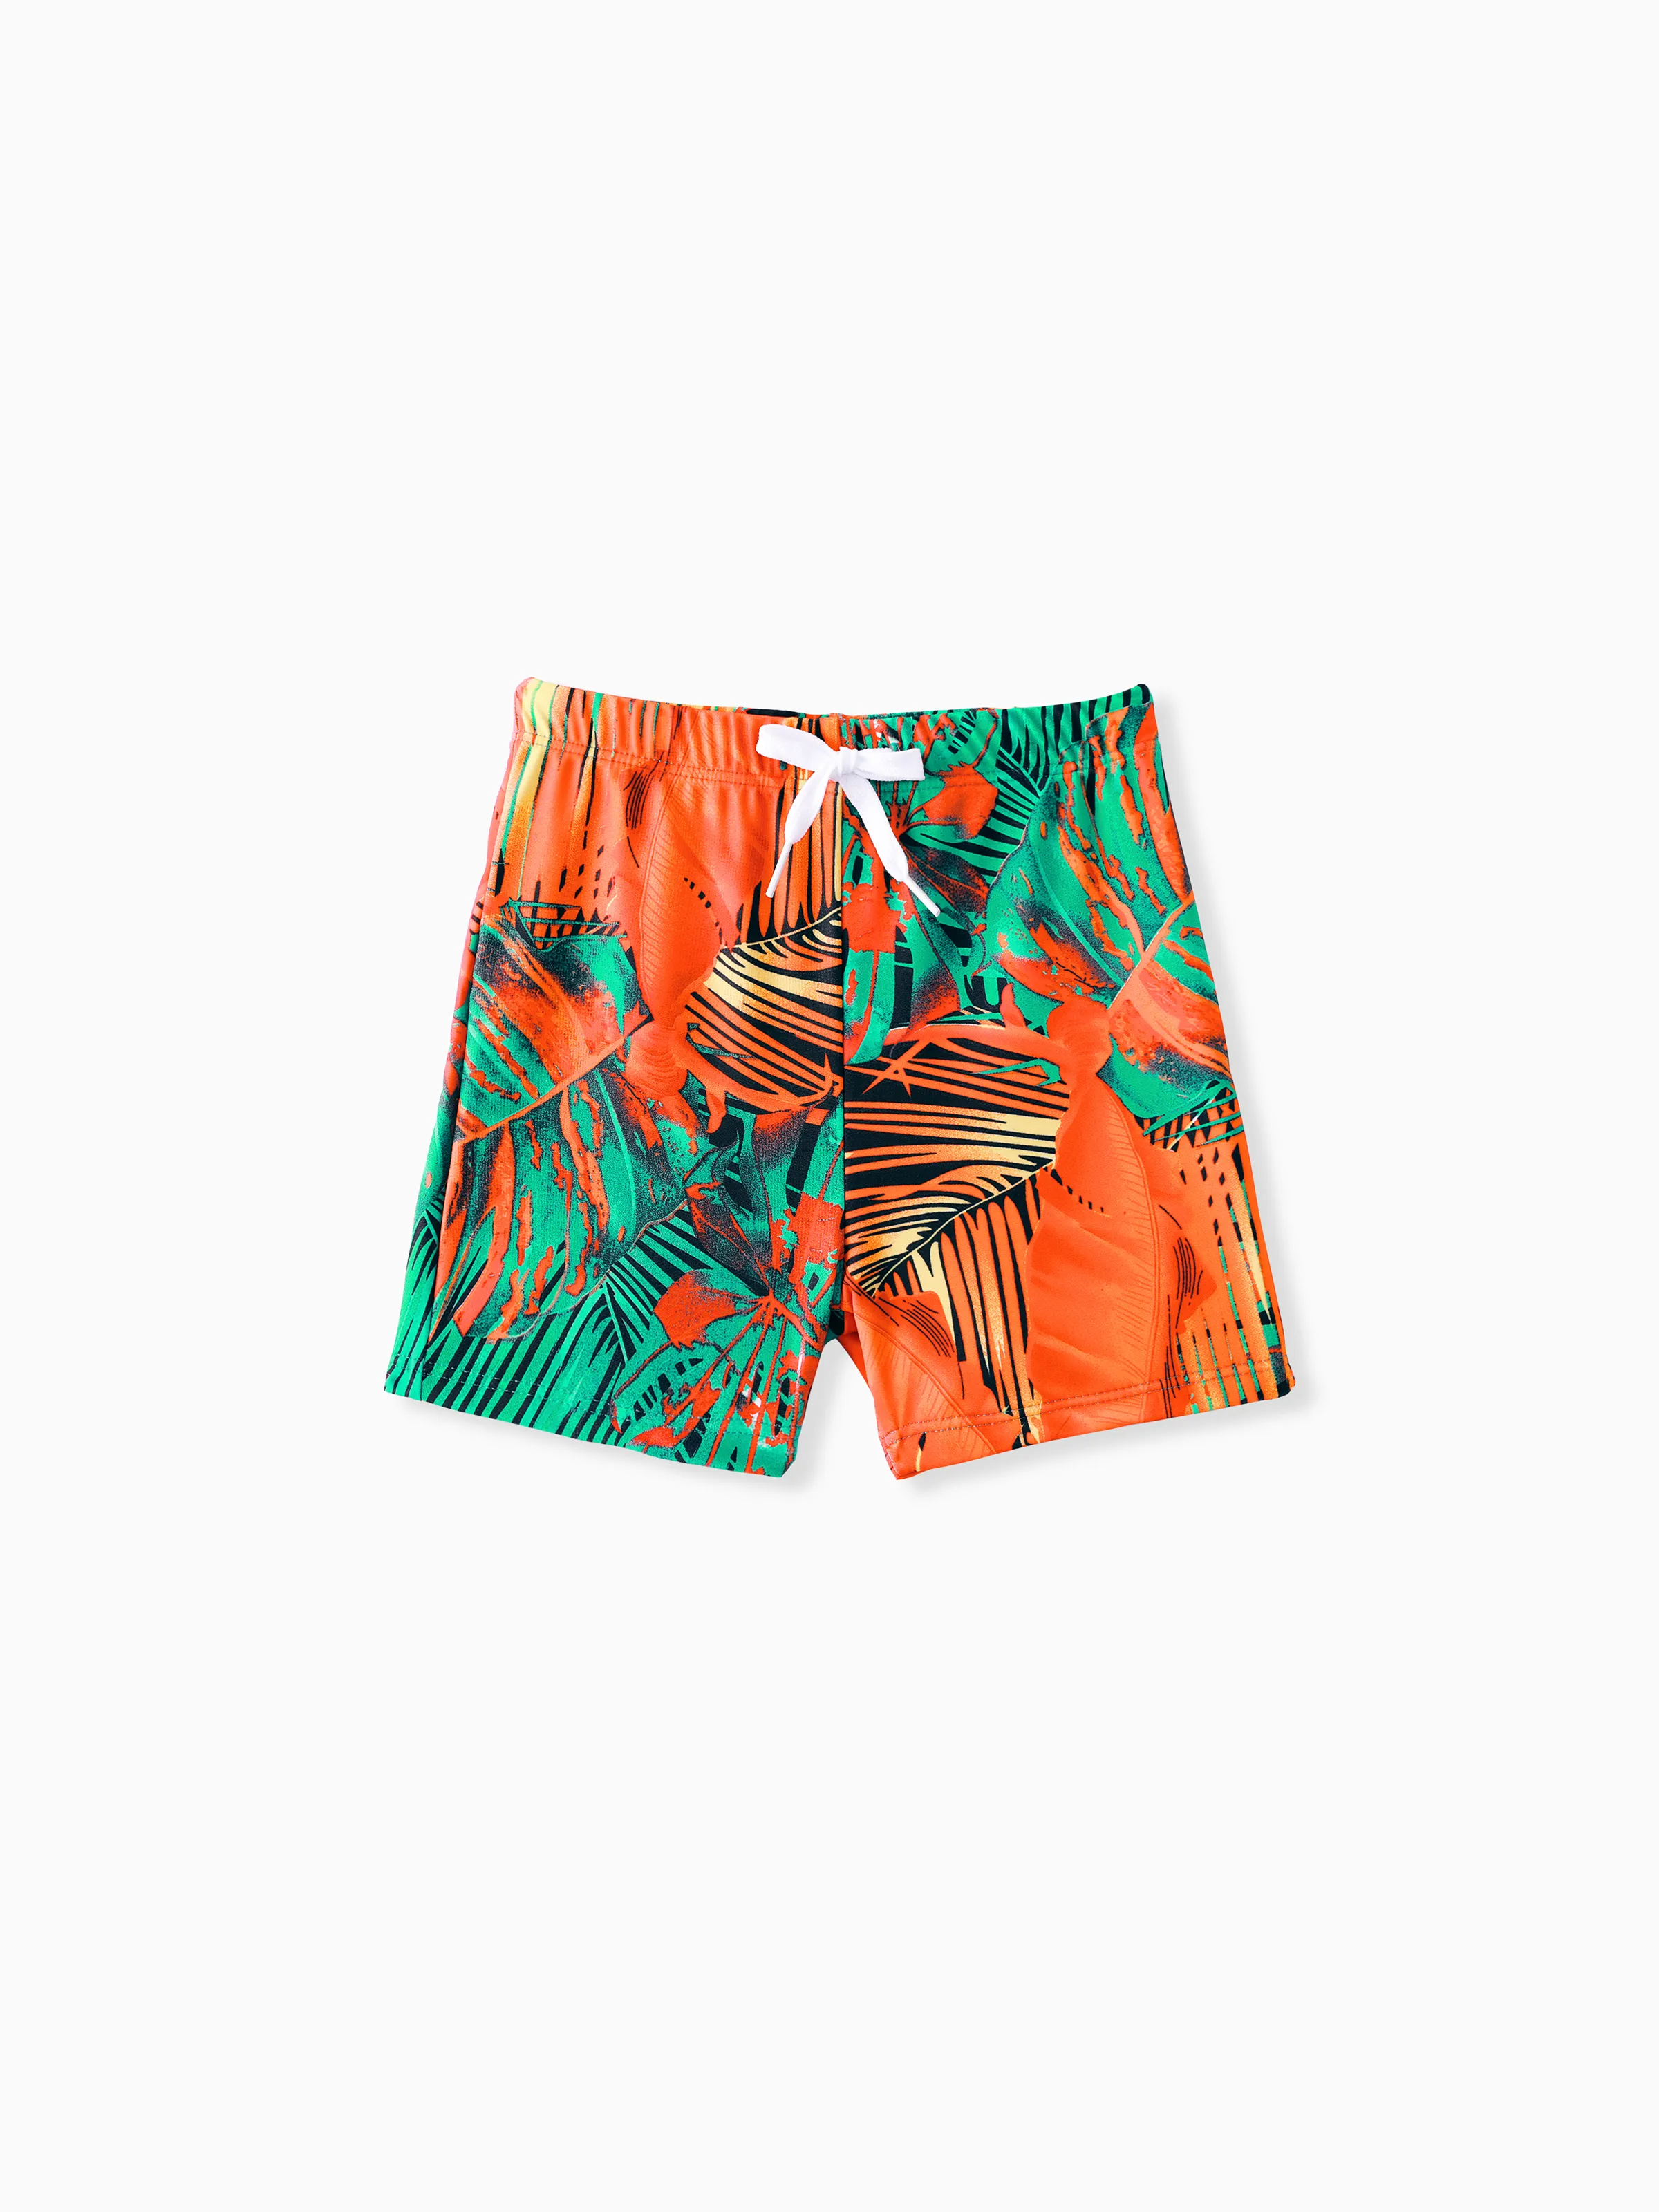 

Family Matching Tropical Leaf Printed One-Piece Swimwear or Drawstring Swim Trunks